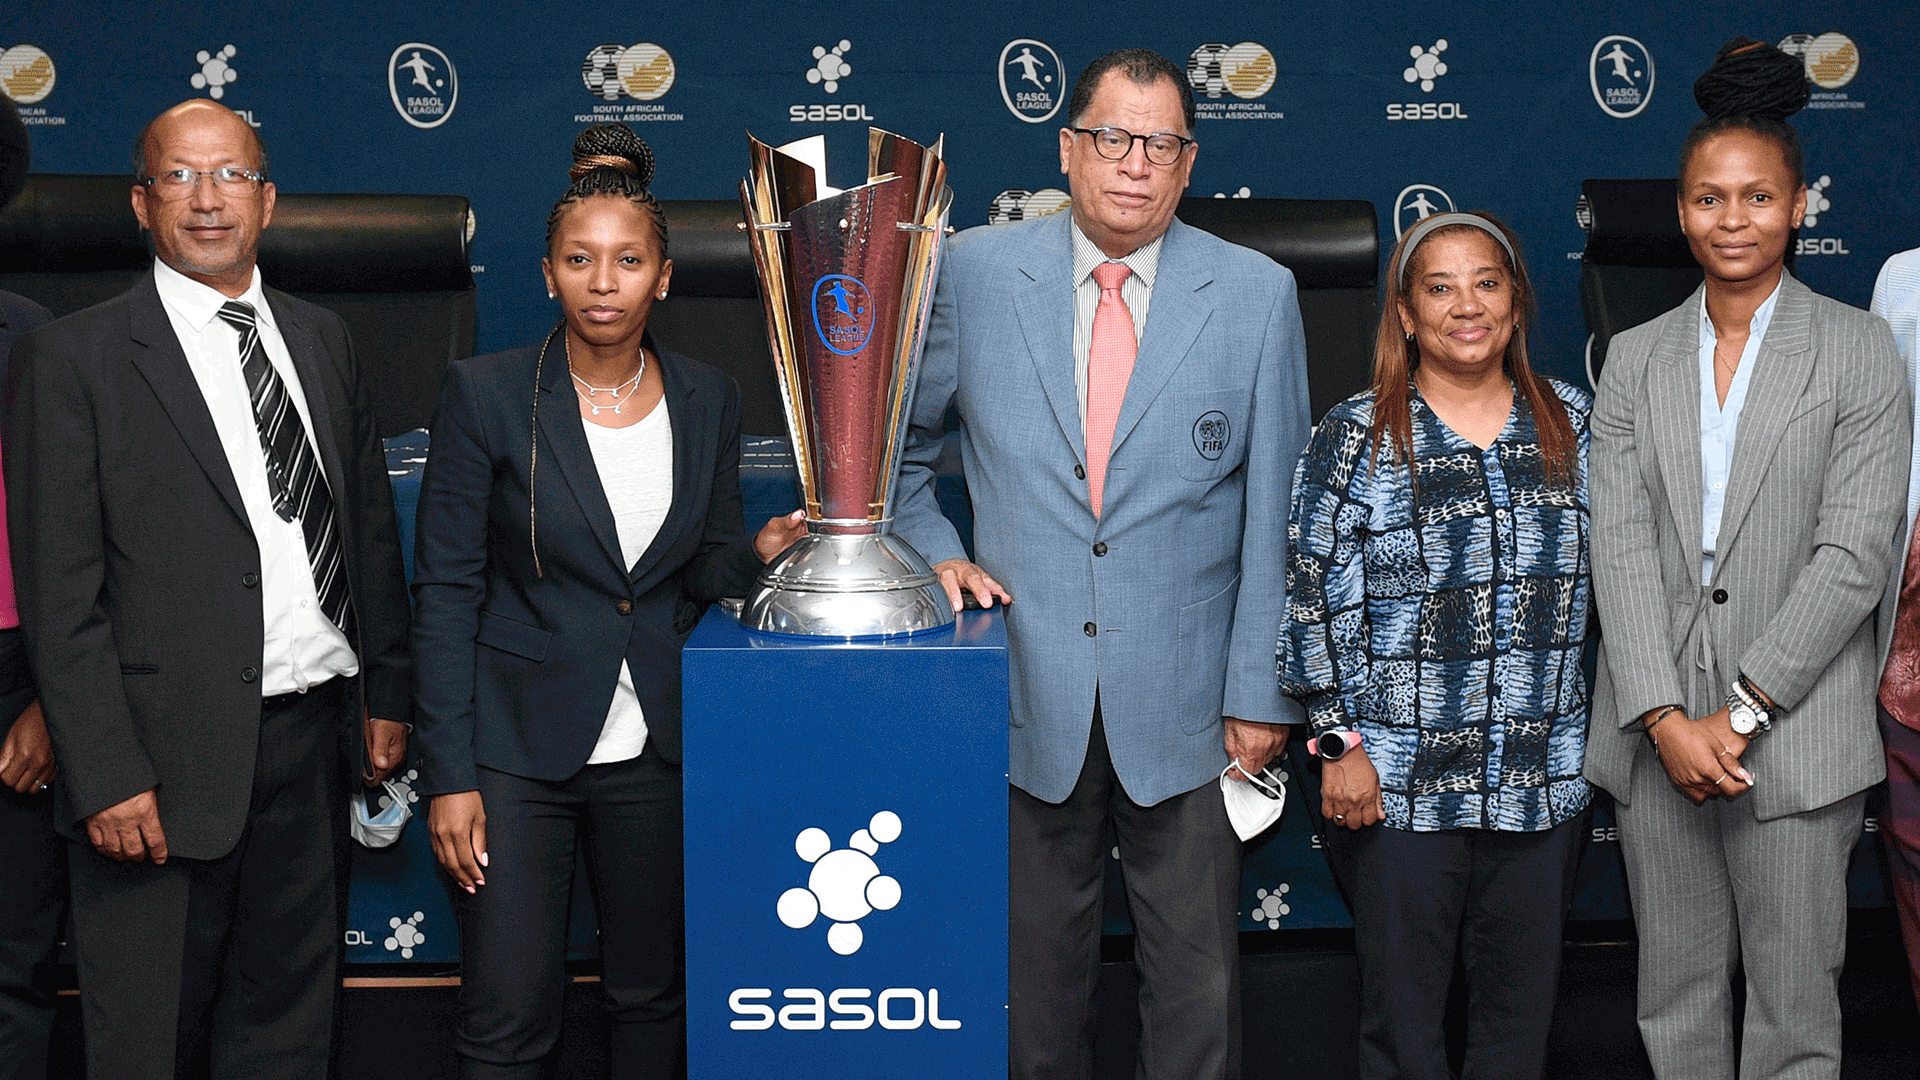 Sasol and SAFA dignitaries pose with the Sasol League championship trophy